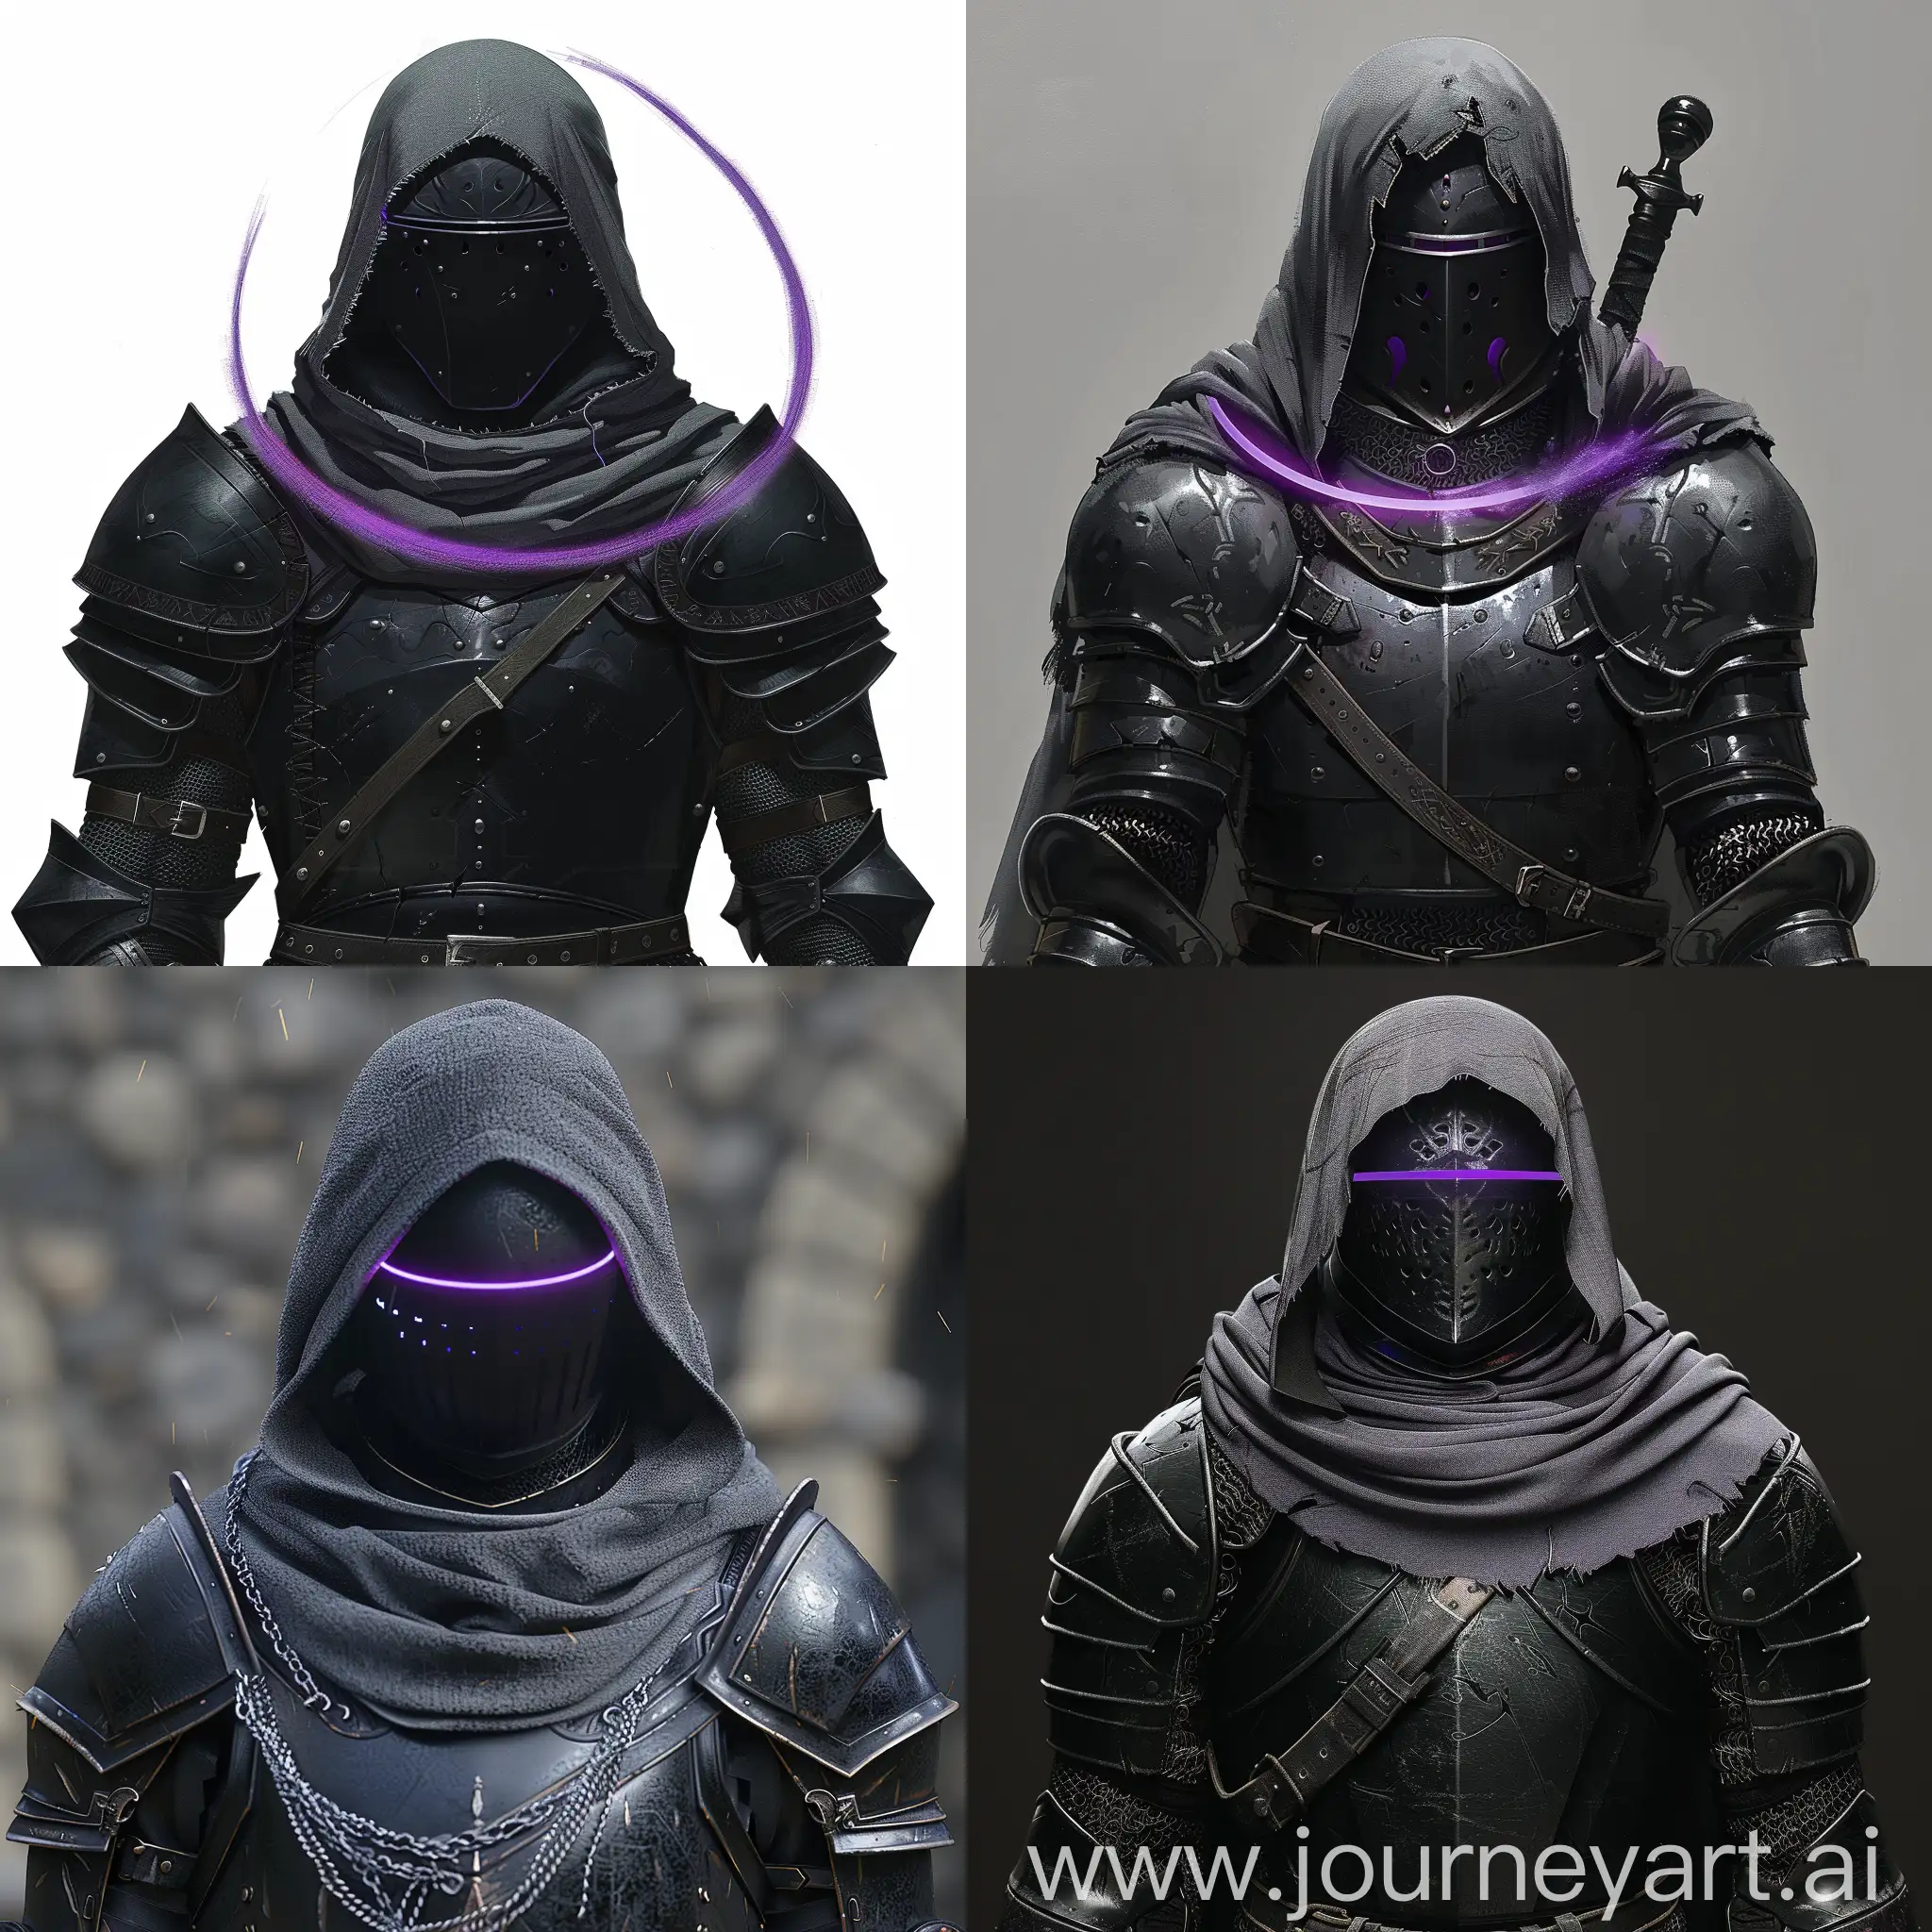 armored knight, black armor, black helmet, purple esense around head, gray hood